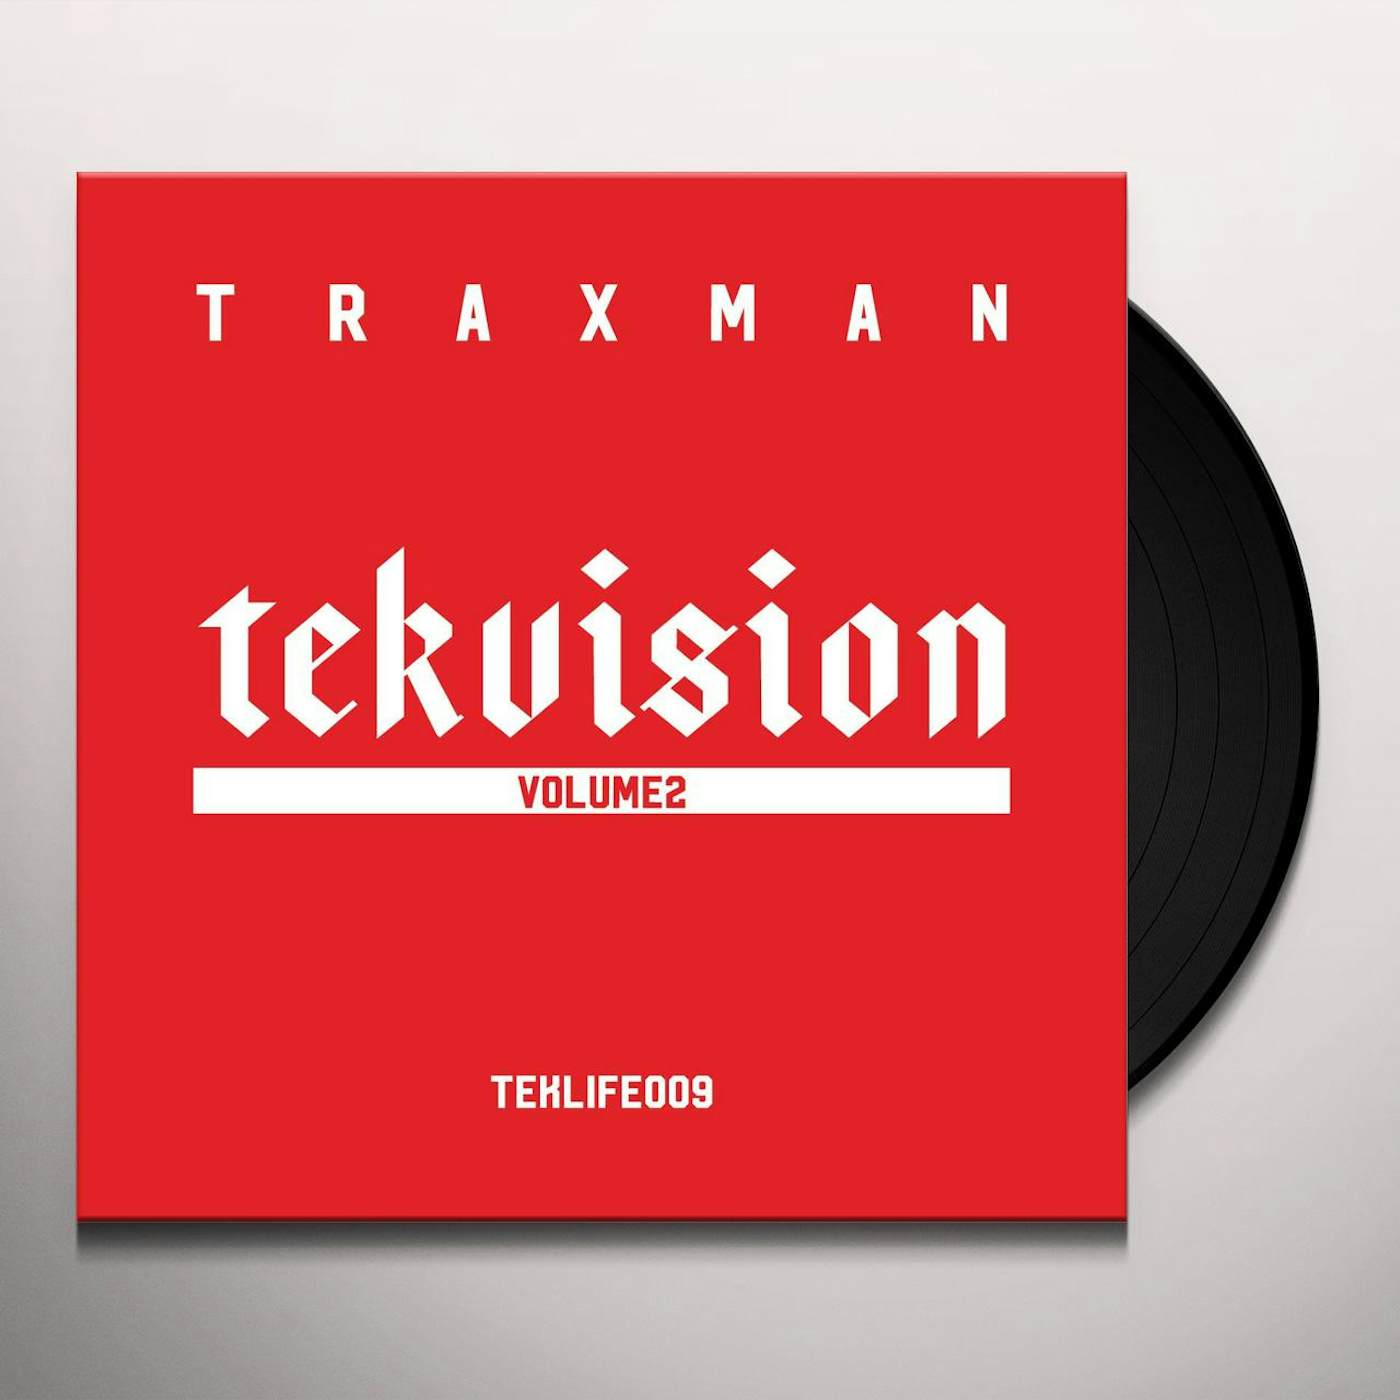 Traxman Tekvision Vol. 2 Vinyl Record